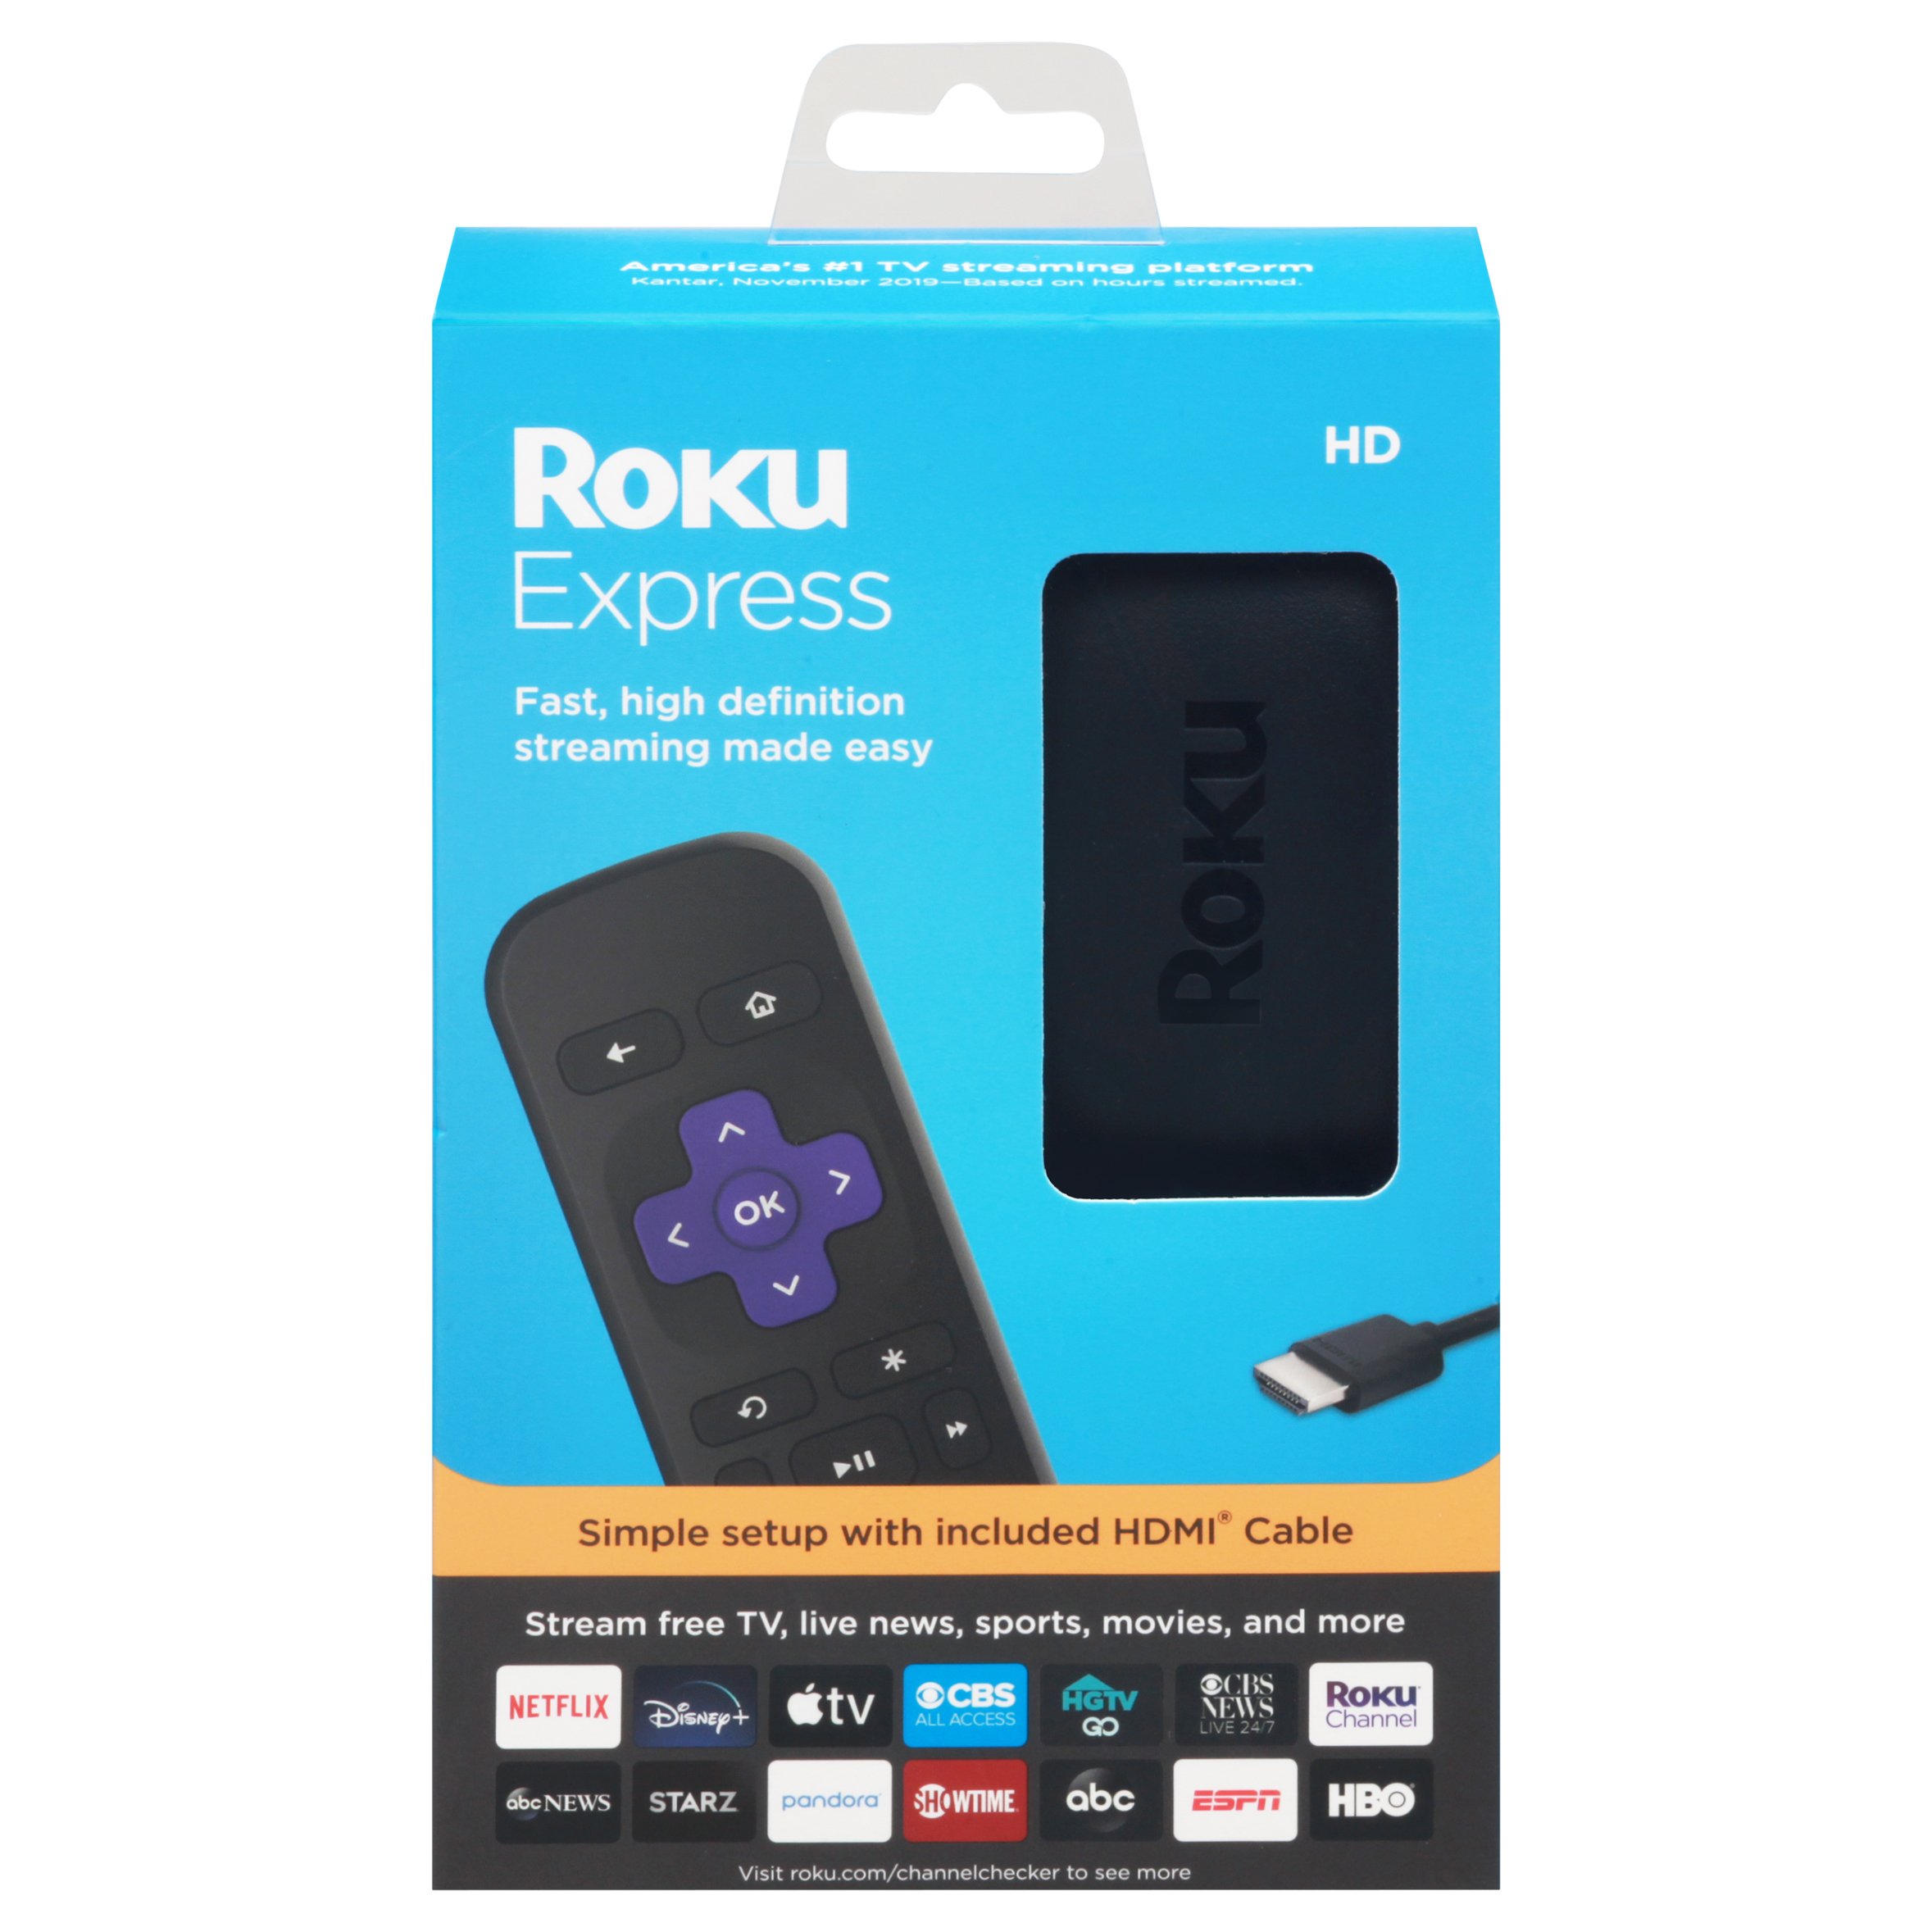 Roku Express - Shop Smart Home at